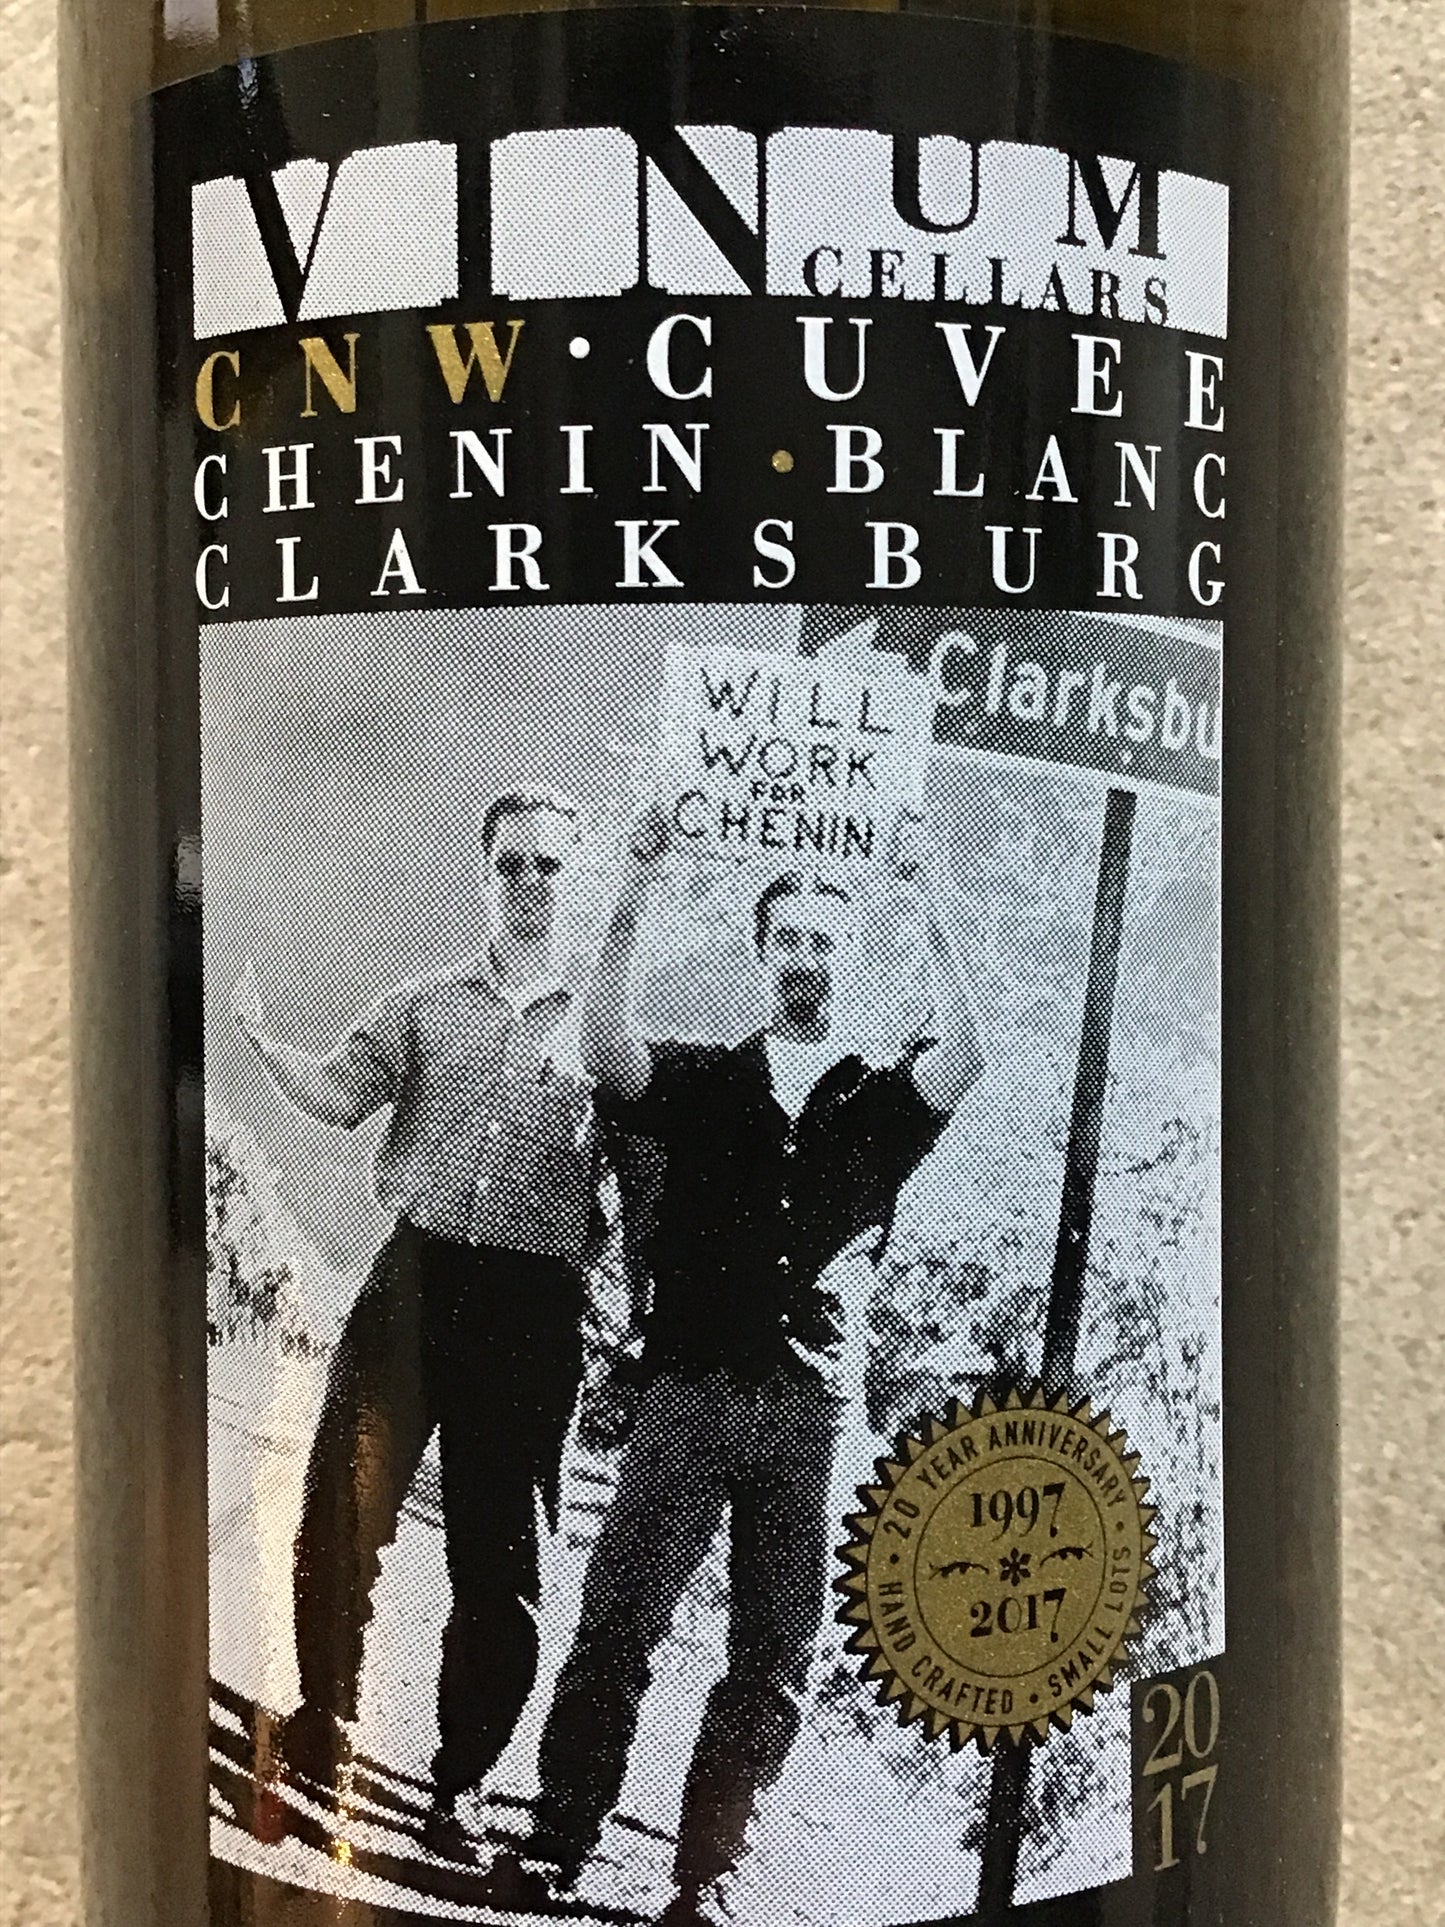 Vinum Cellars - Chenin Blanc - Clarksburg